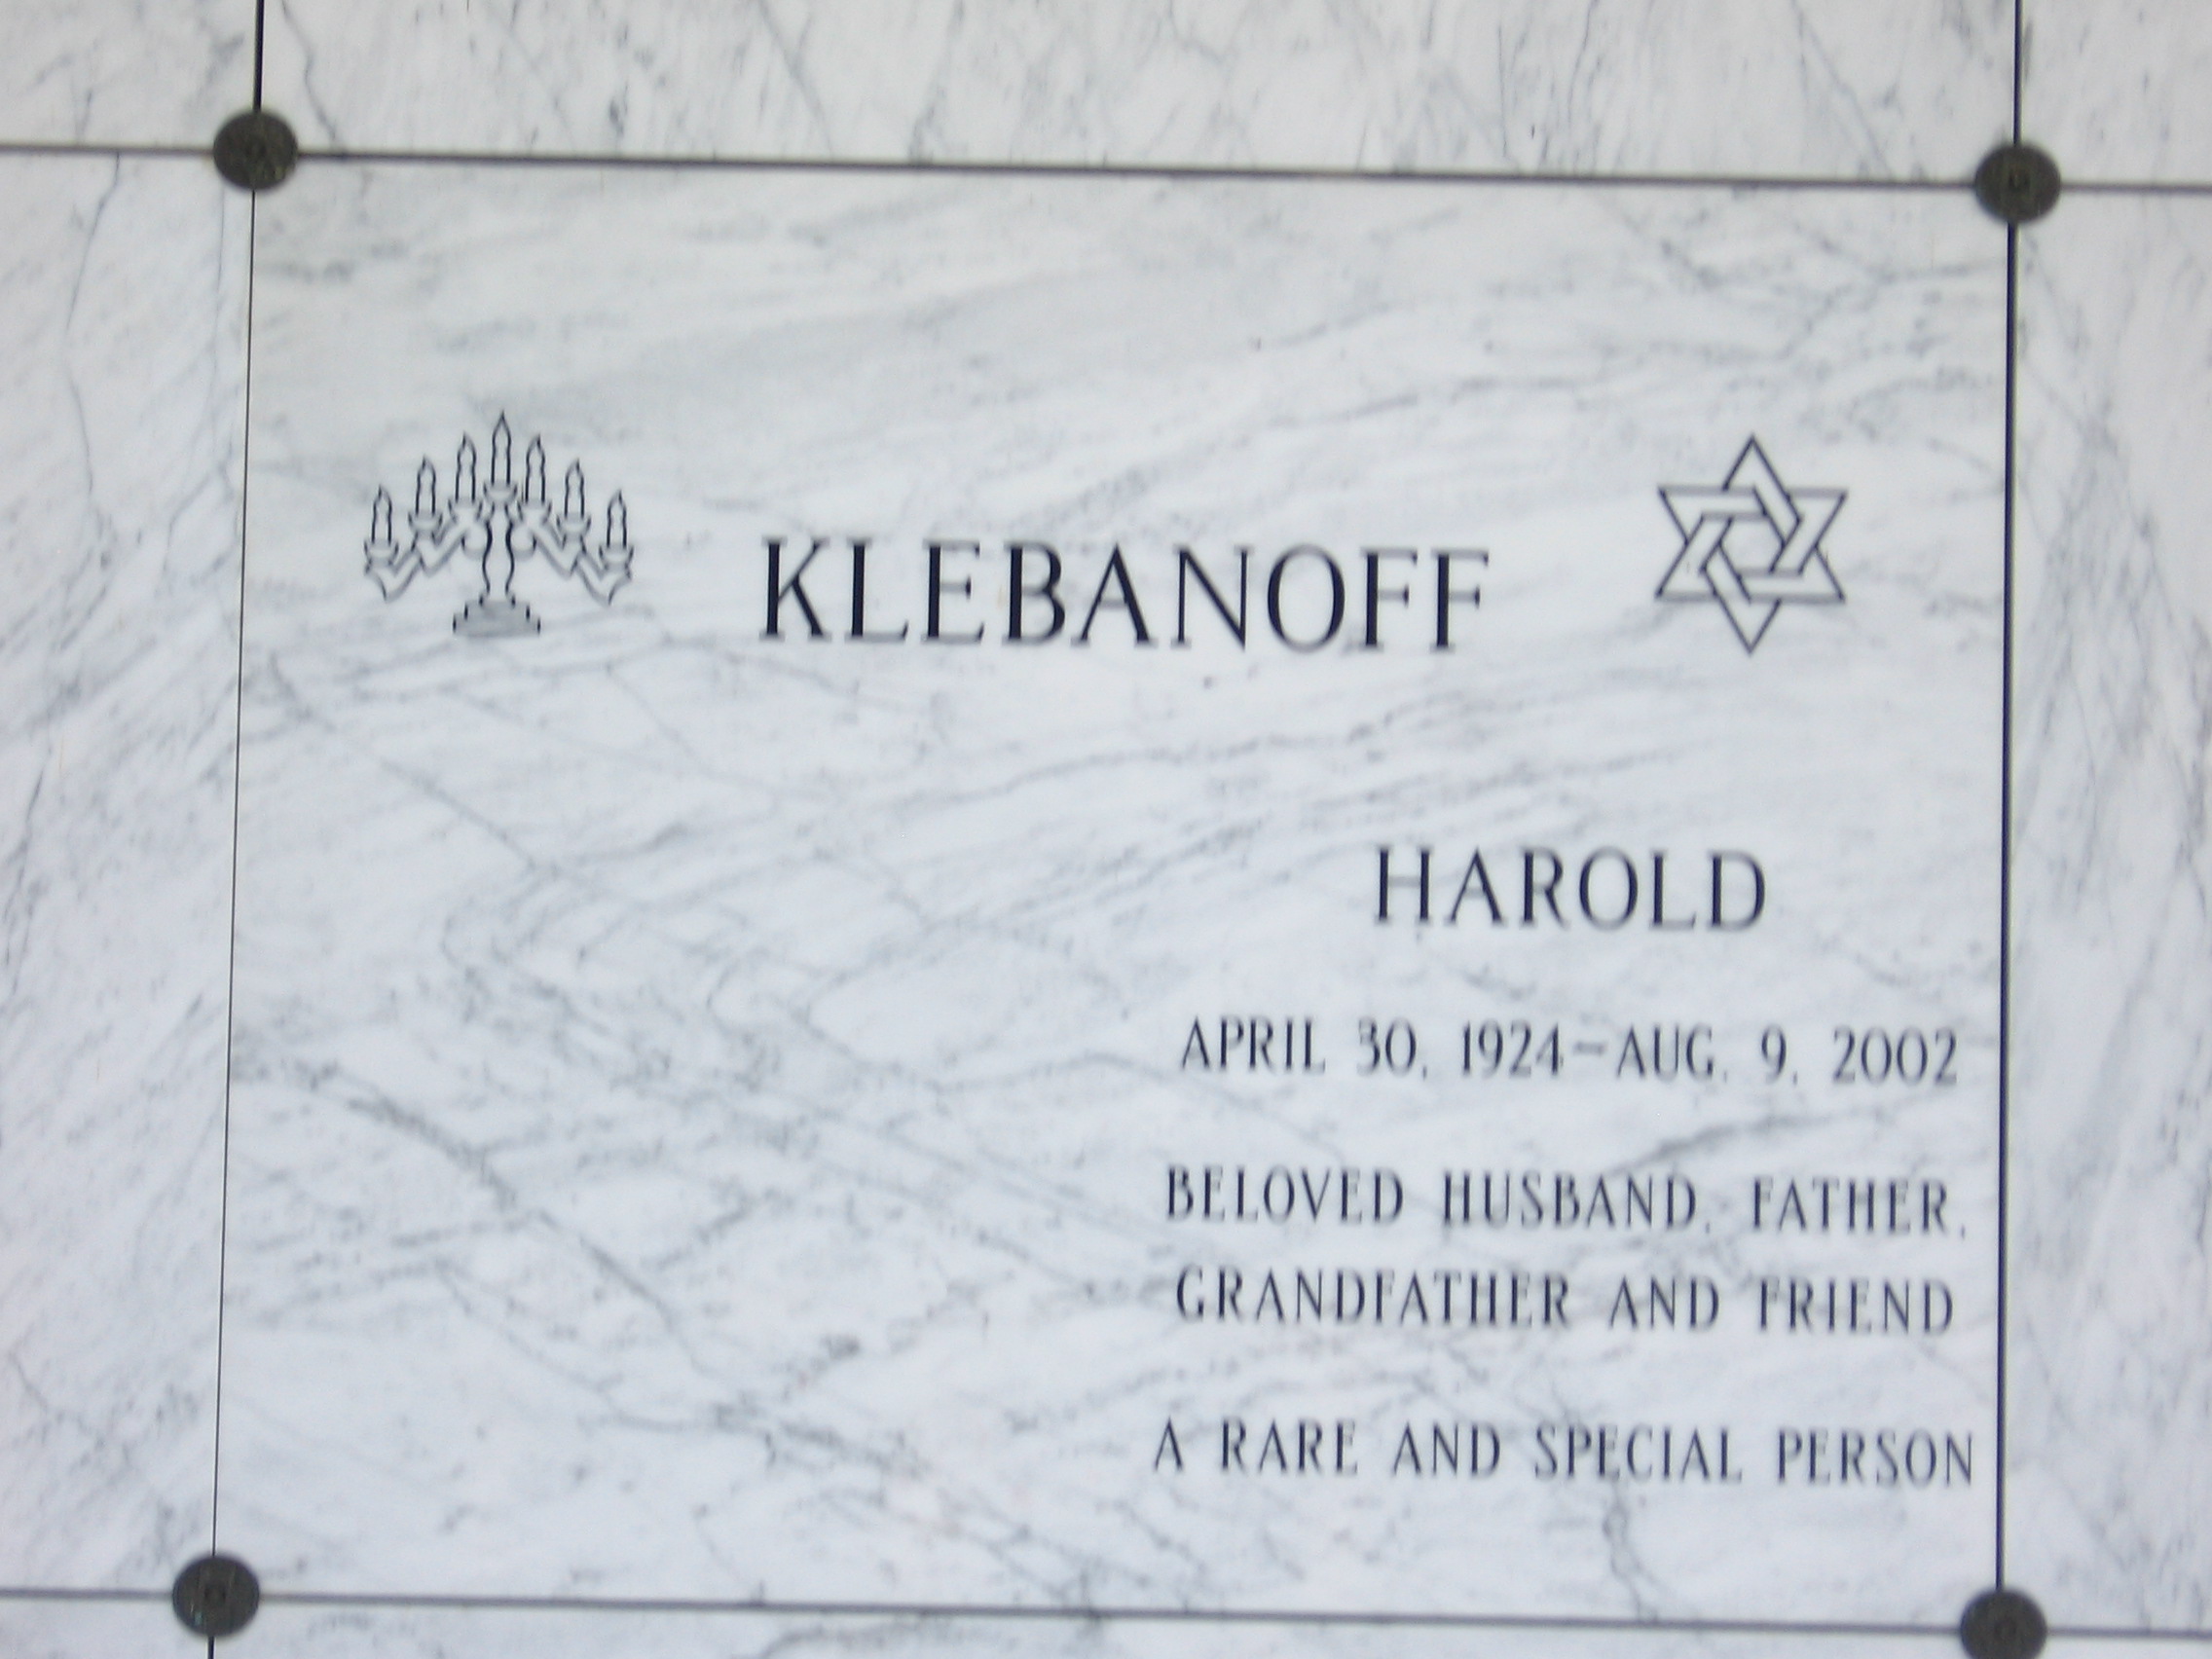 Harold Klebanoff